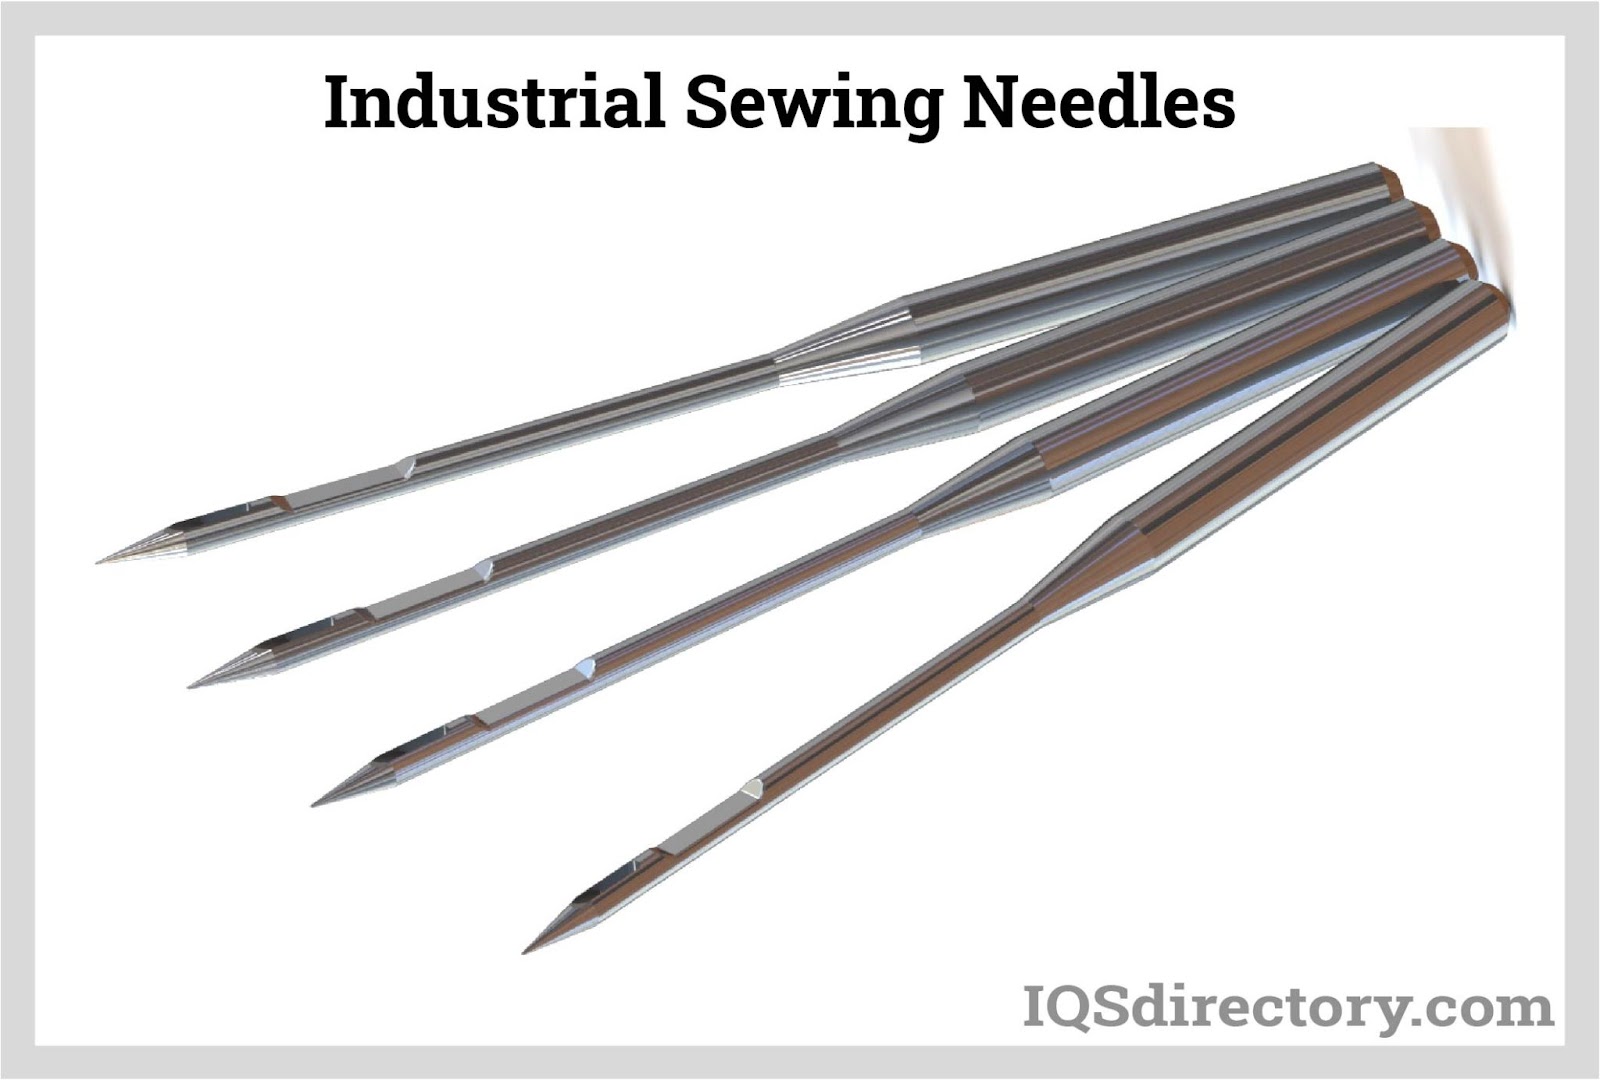 Industrial Sewing Needles